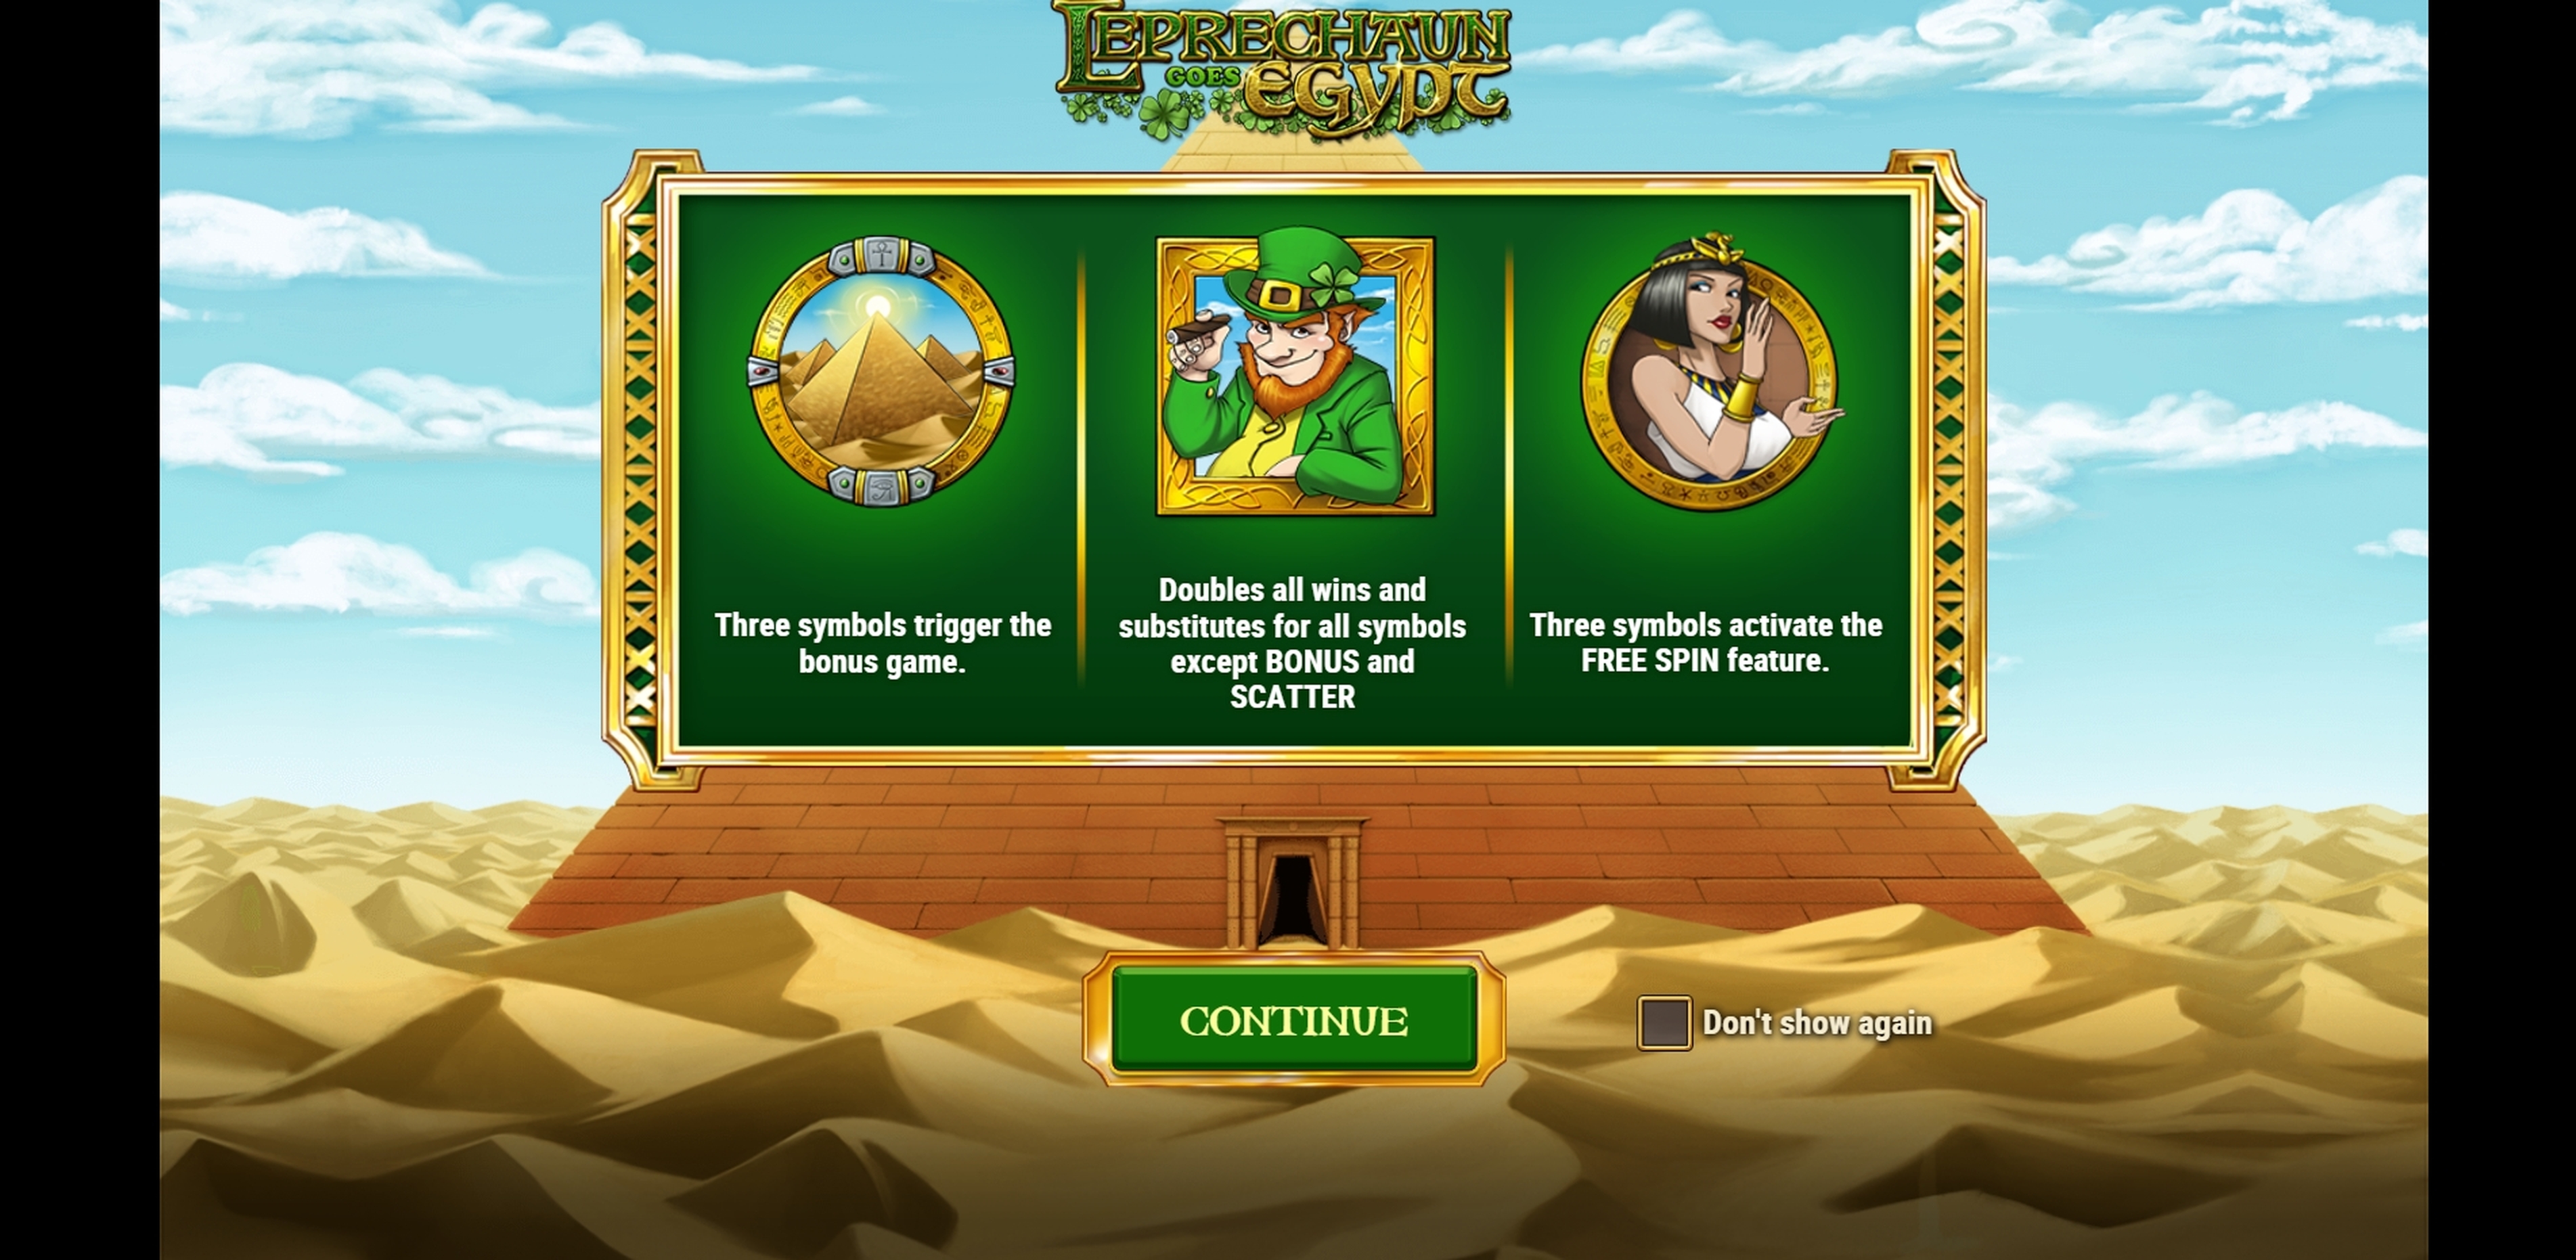 Play Leprechaun goes Egypt Free Casino Slot Game by Playn GO